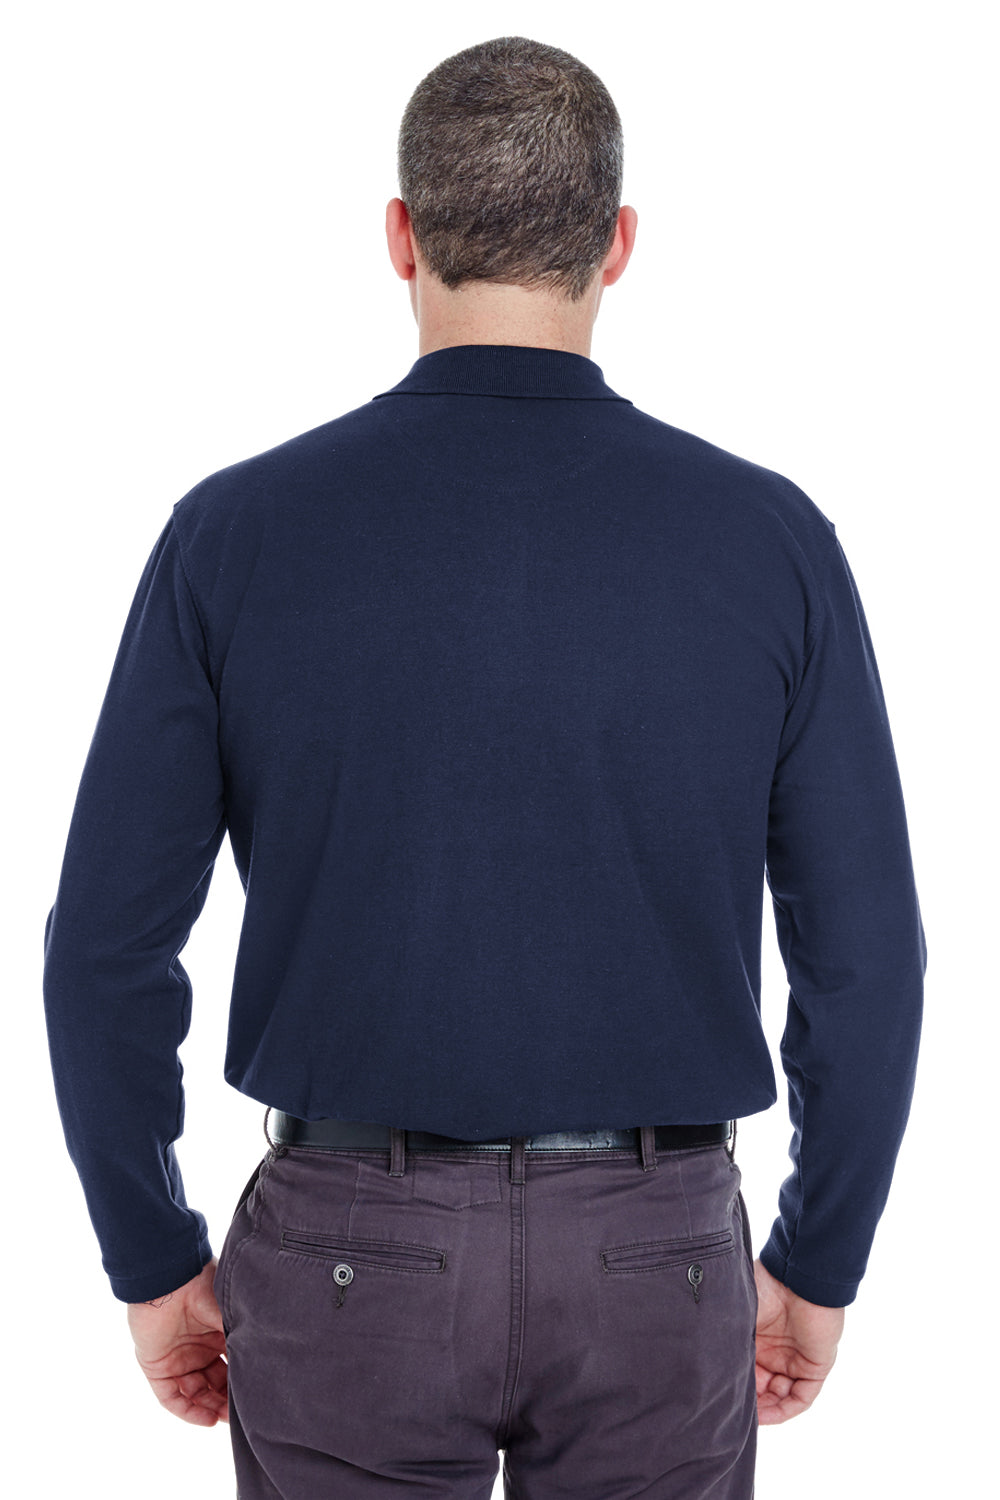 UltraClub 8542 Mens Whisper Long Sleeve Polo Shirt Navy Blue Back